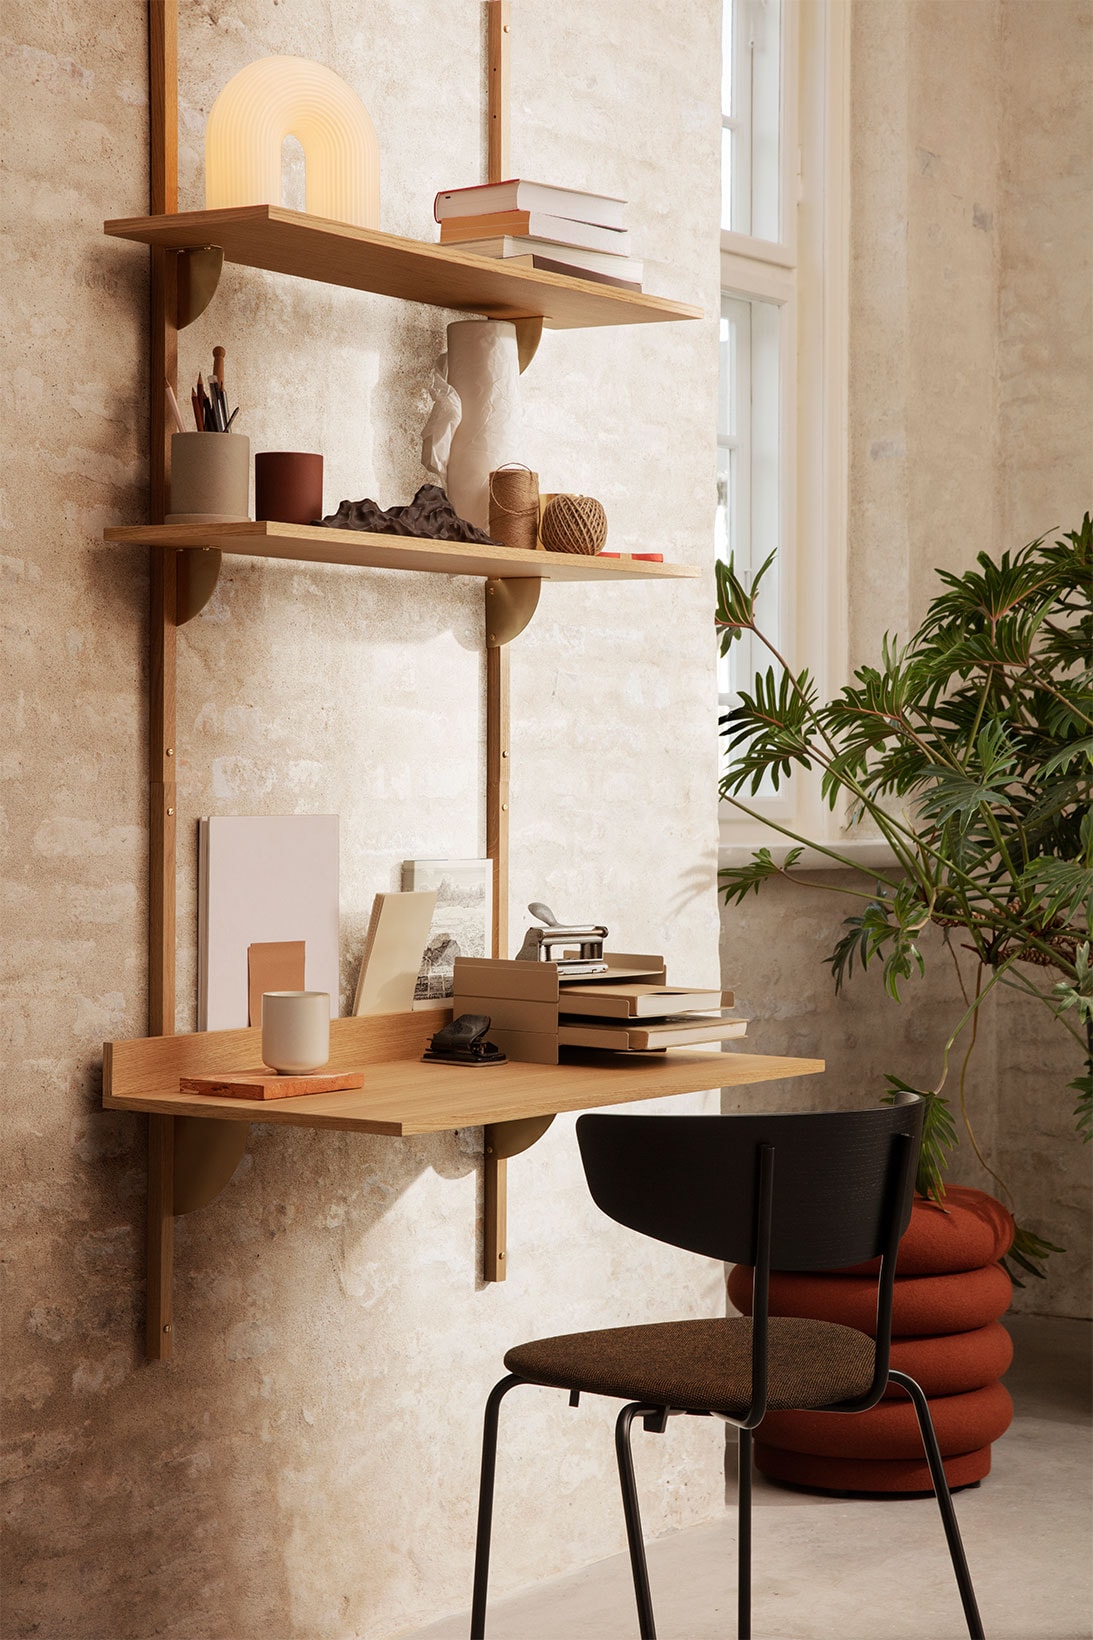 best home office ideas decoration minimal simple space-saving ferm living sector wood desk